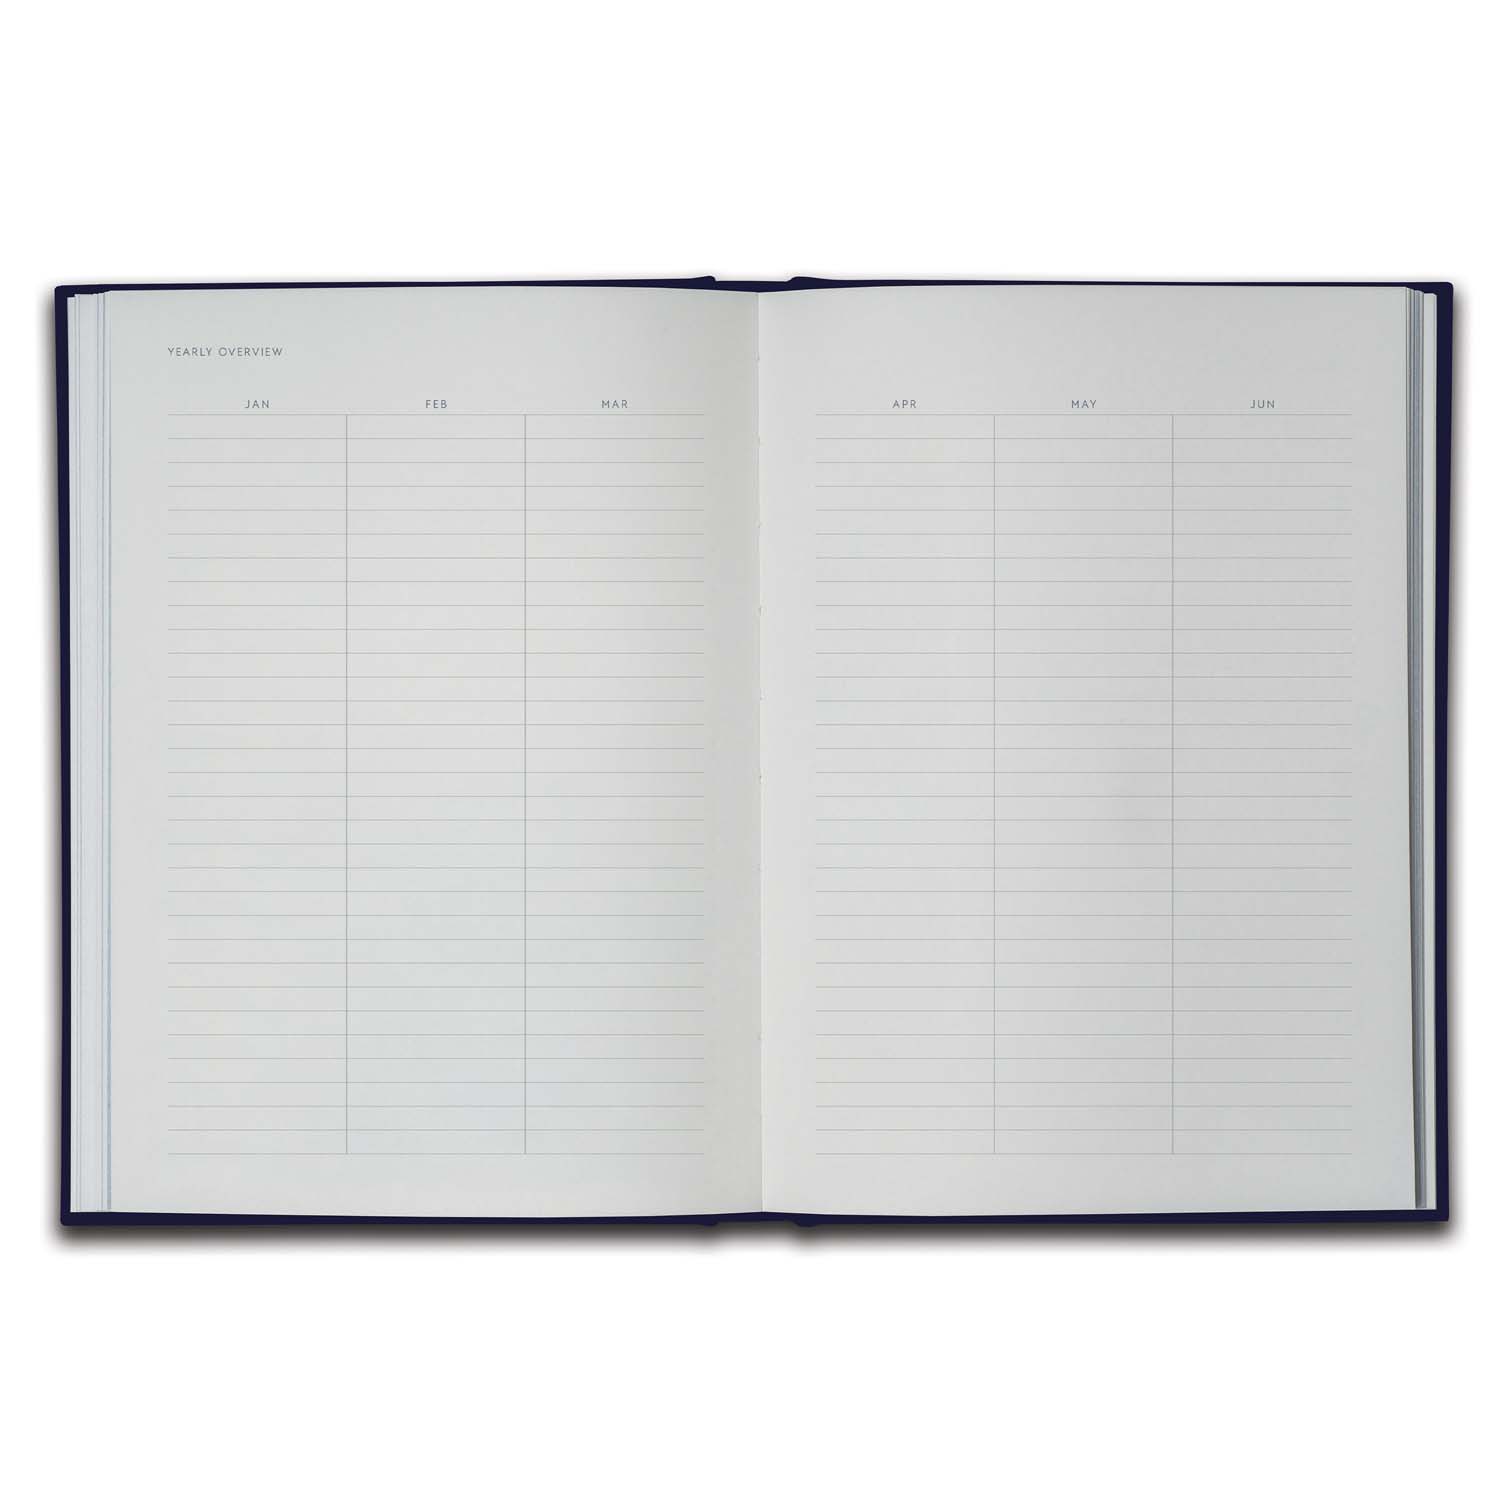 Hartover Notebook Yearly Planner KartotekCopenhagen PN-0003 / Inside 1